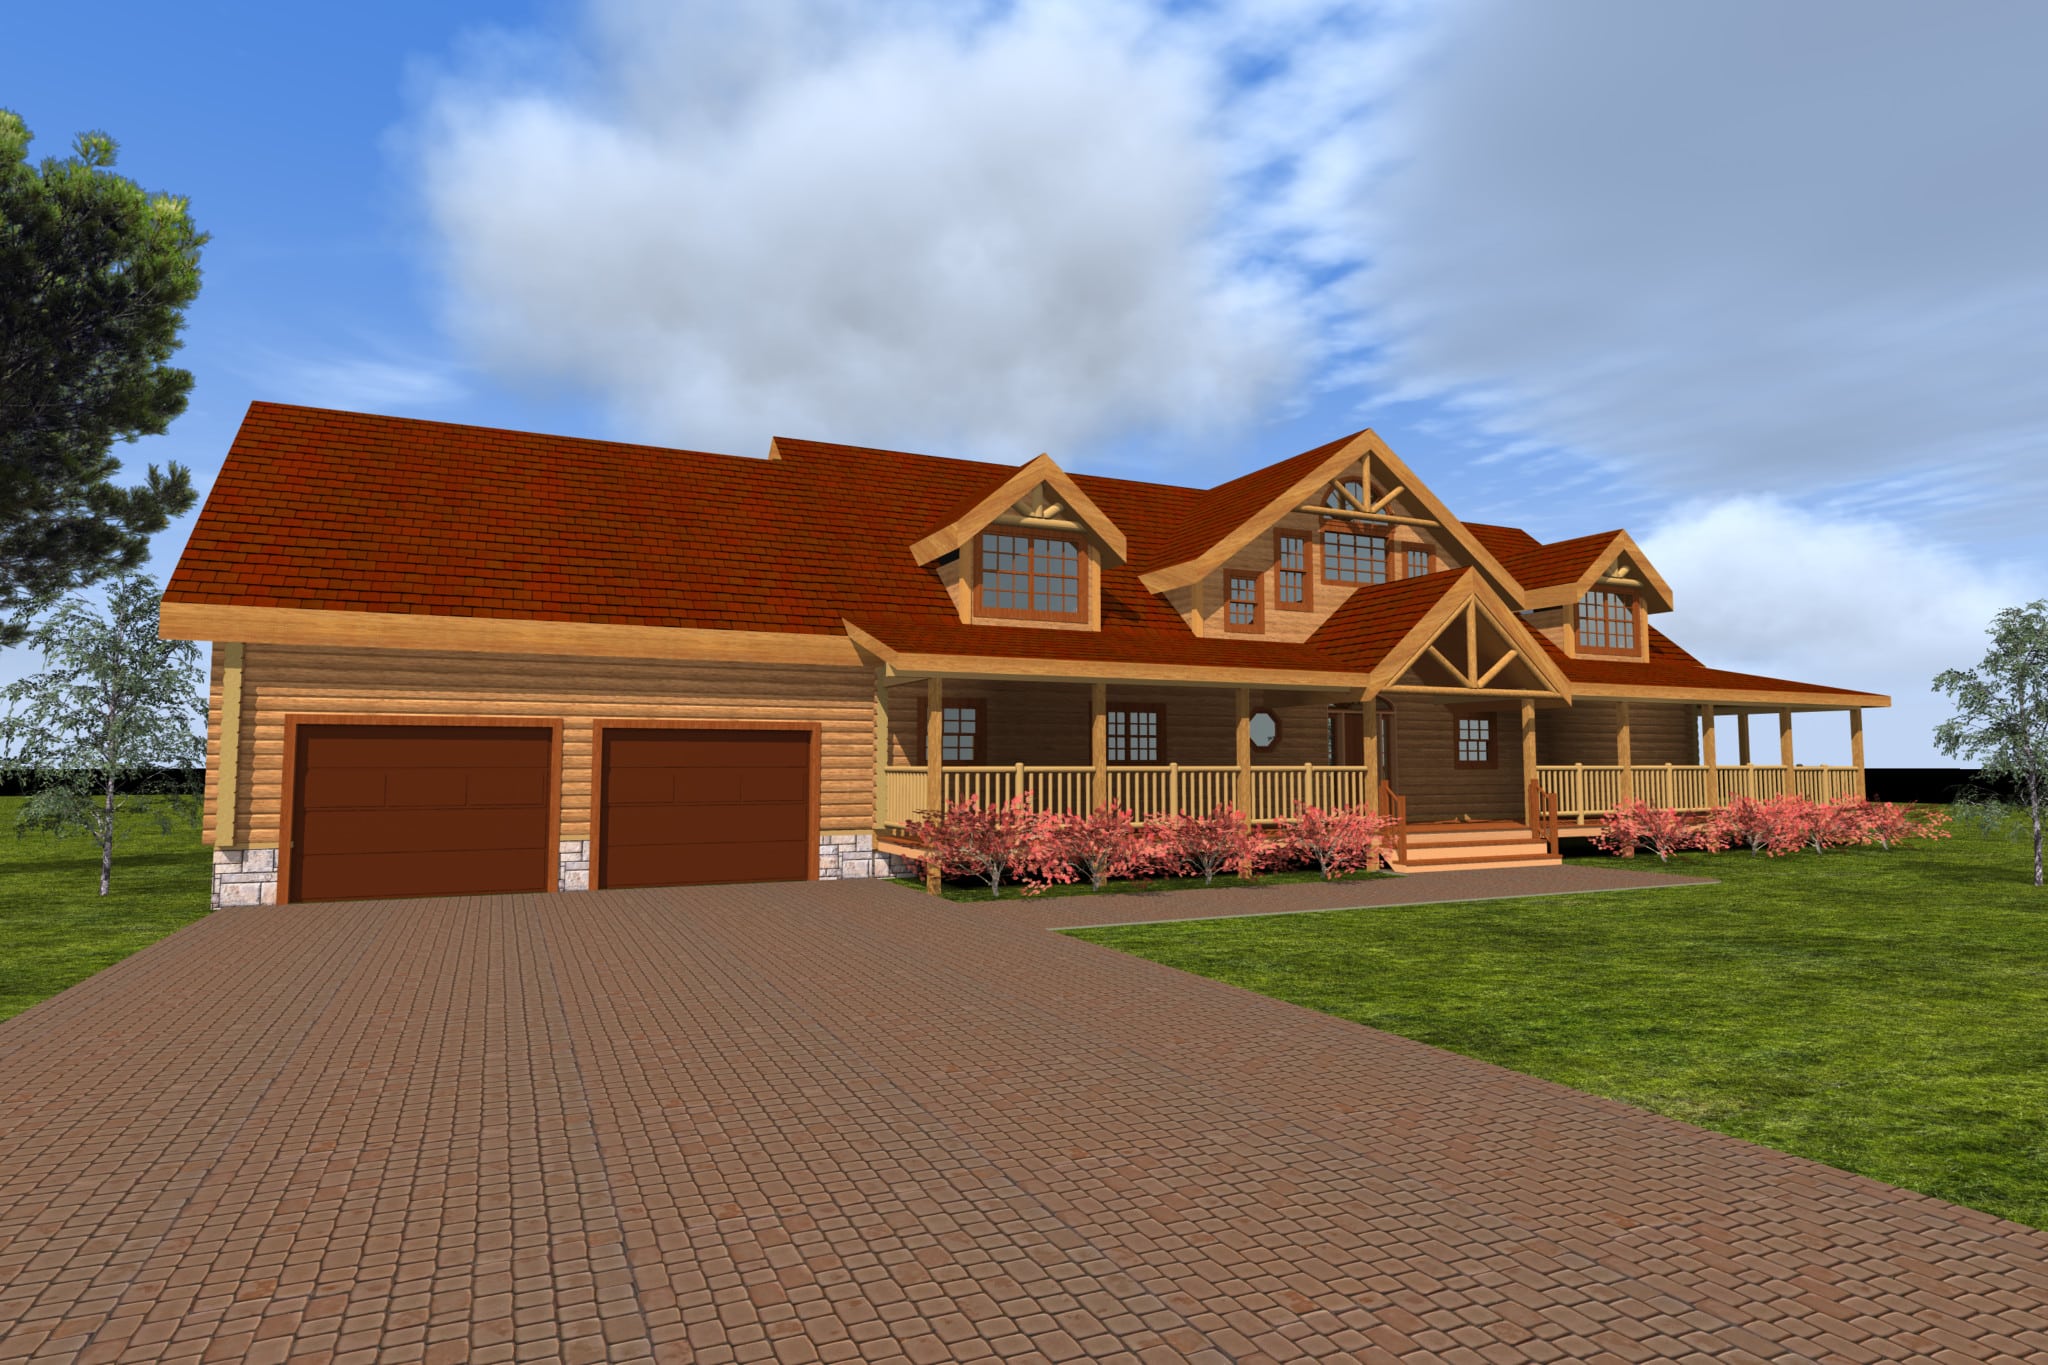 The Spring City Log Home Plan, 3 bedroom, 2 bathroom, 2 story log home plan